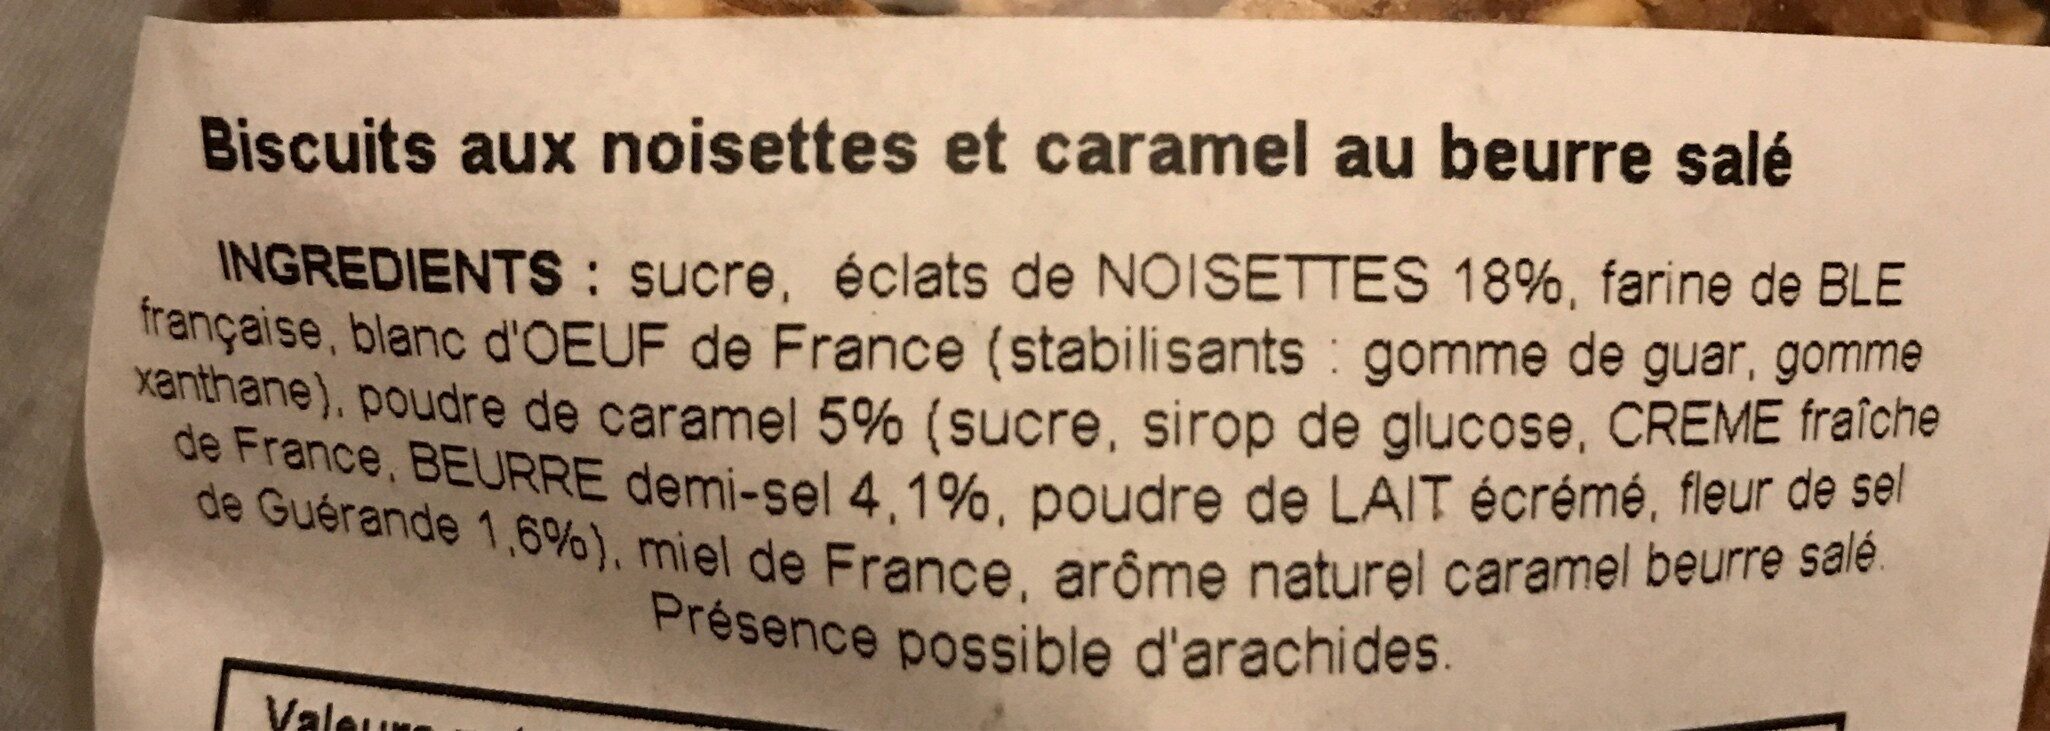 Croquants - Ingredients - fr